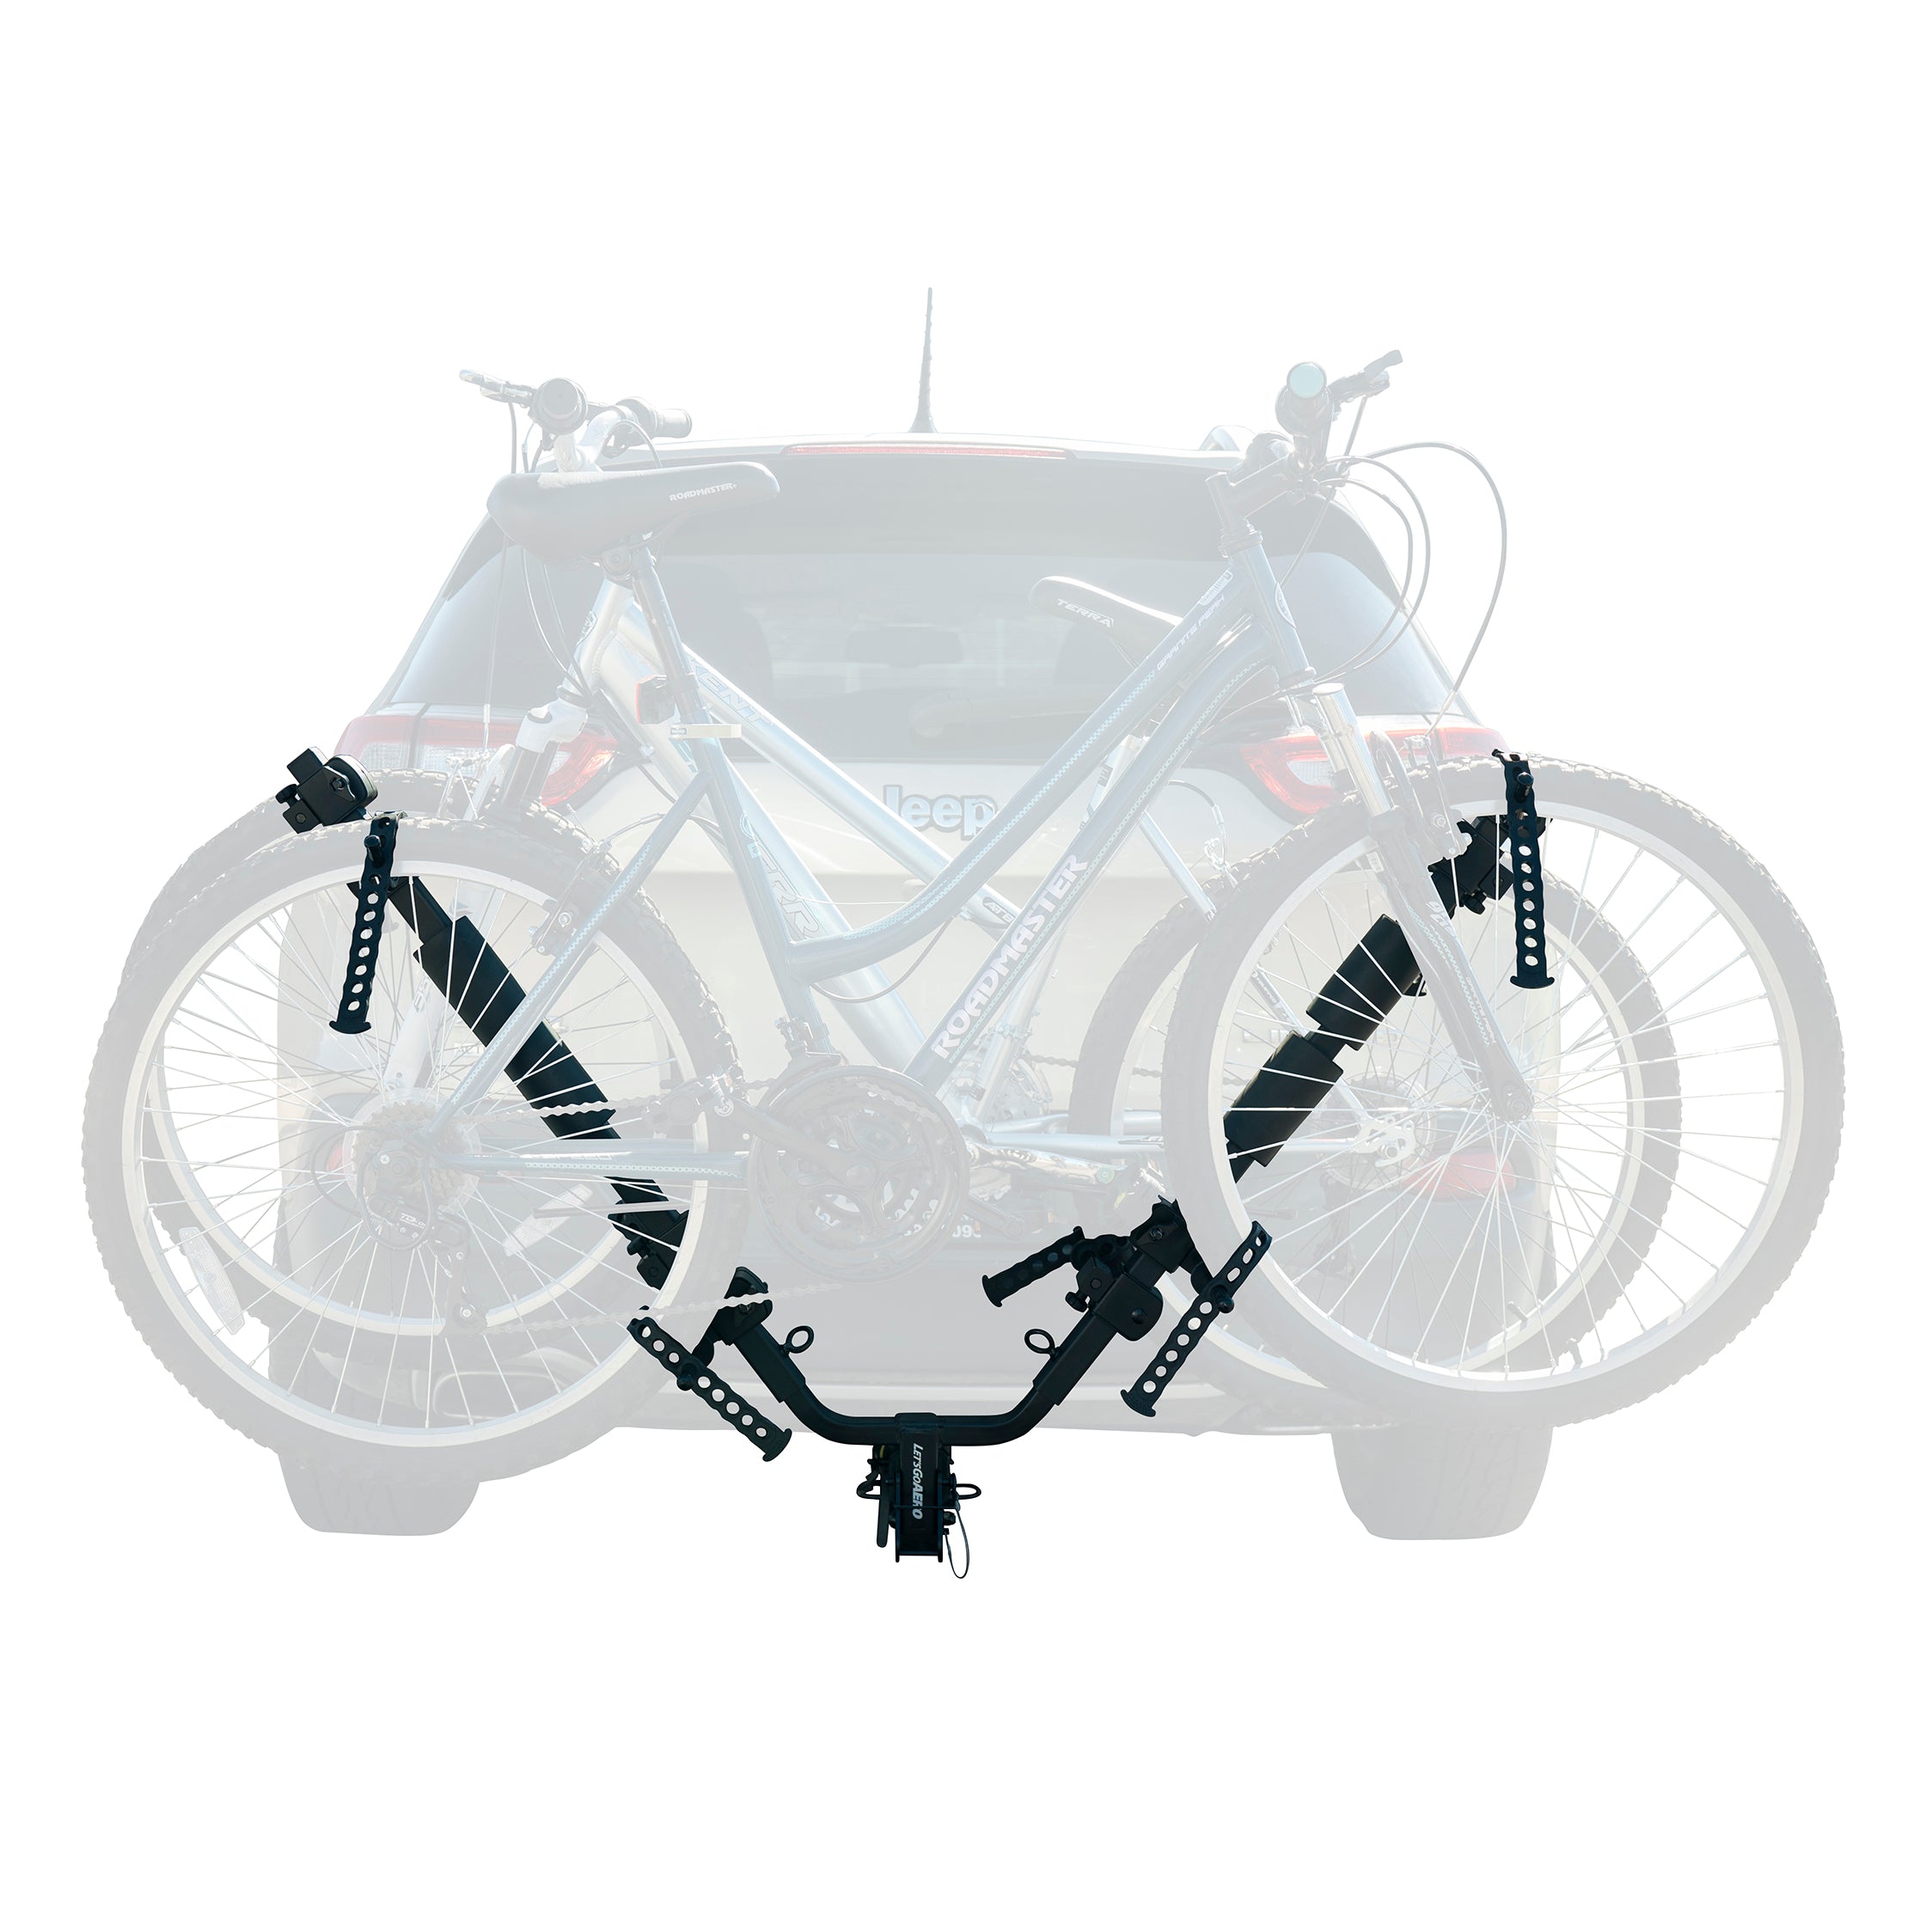 BikeWing-2 PRO Tilting Two Bike Rack